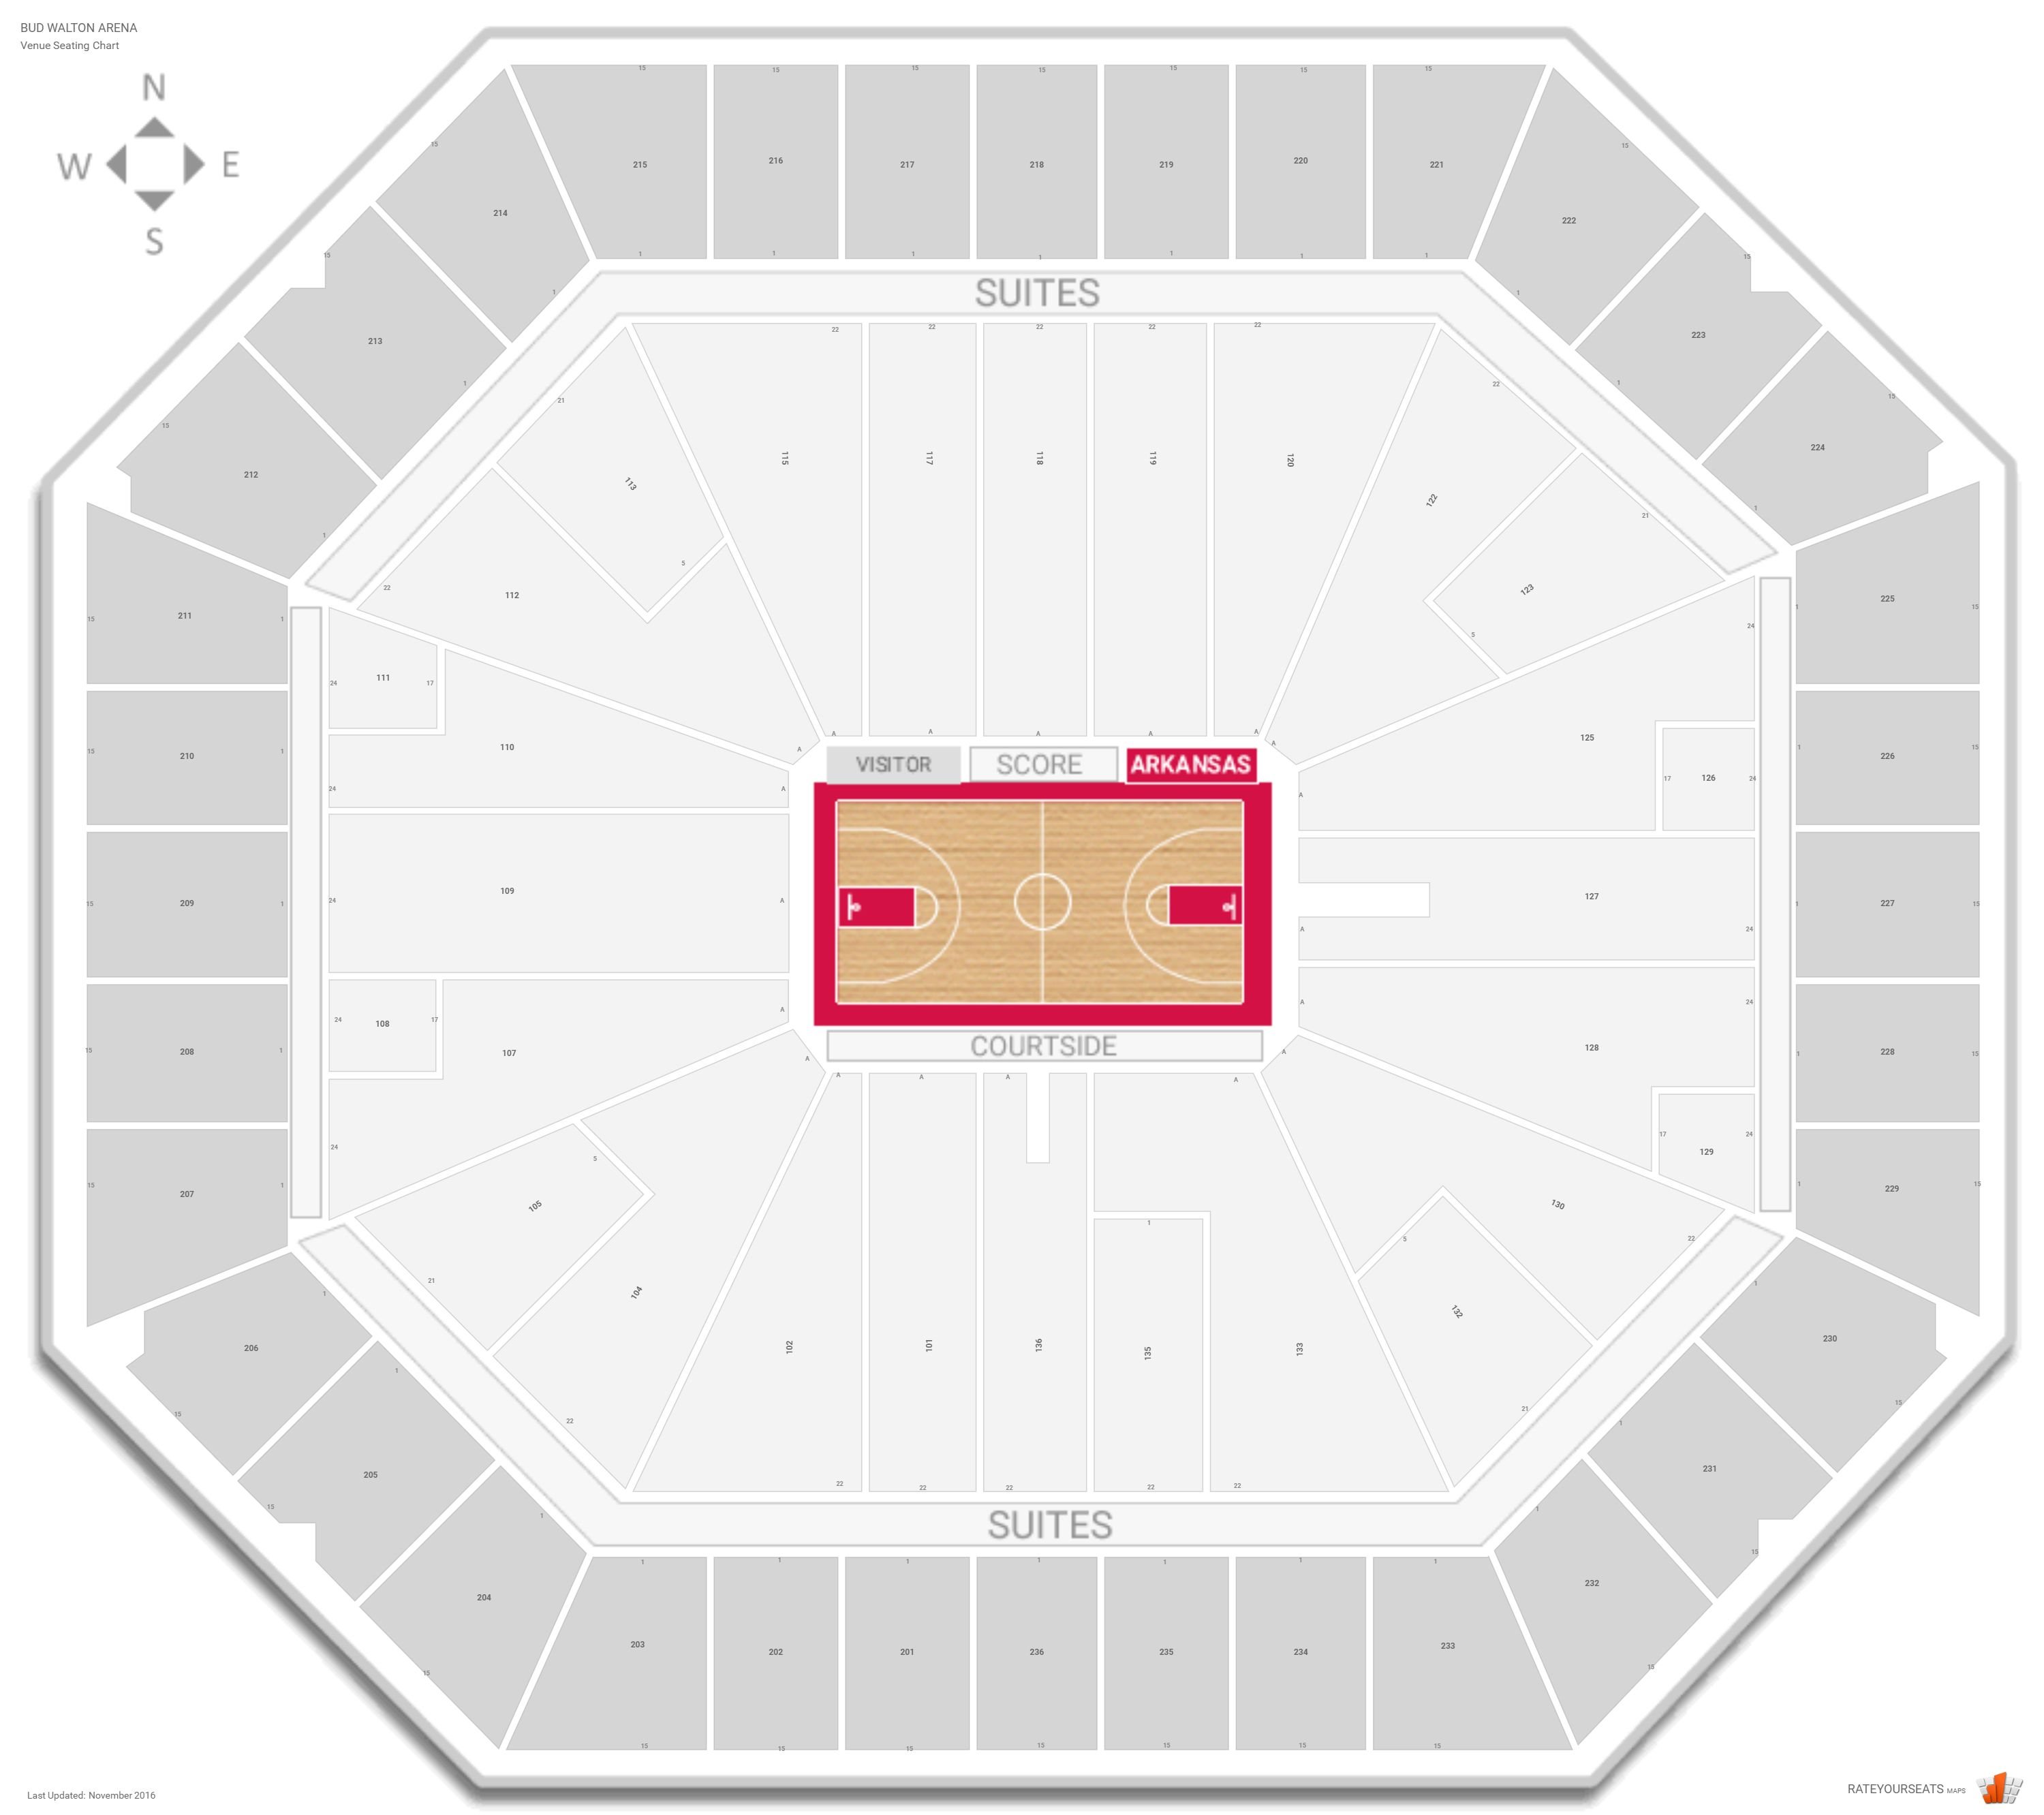 Bud Walton Arena (Arkansas) Seating Guide - RateYourSeats.com